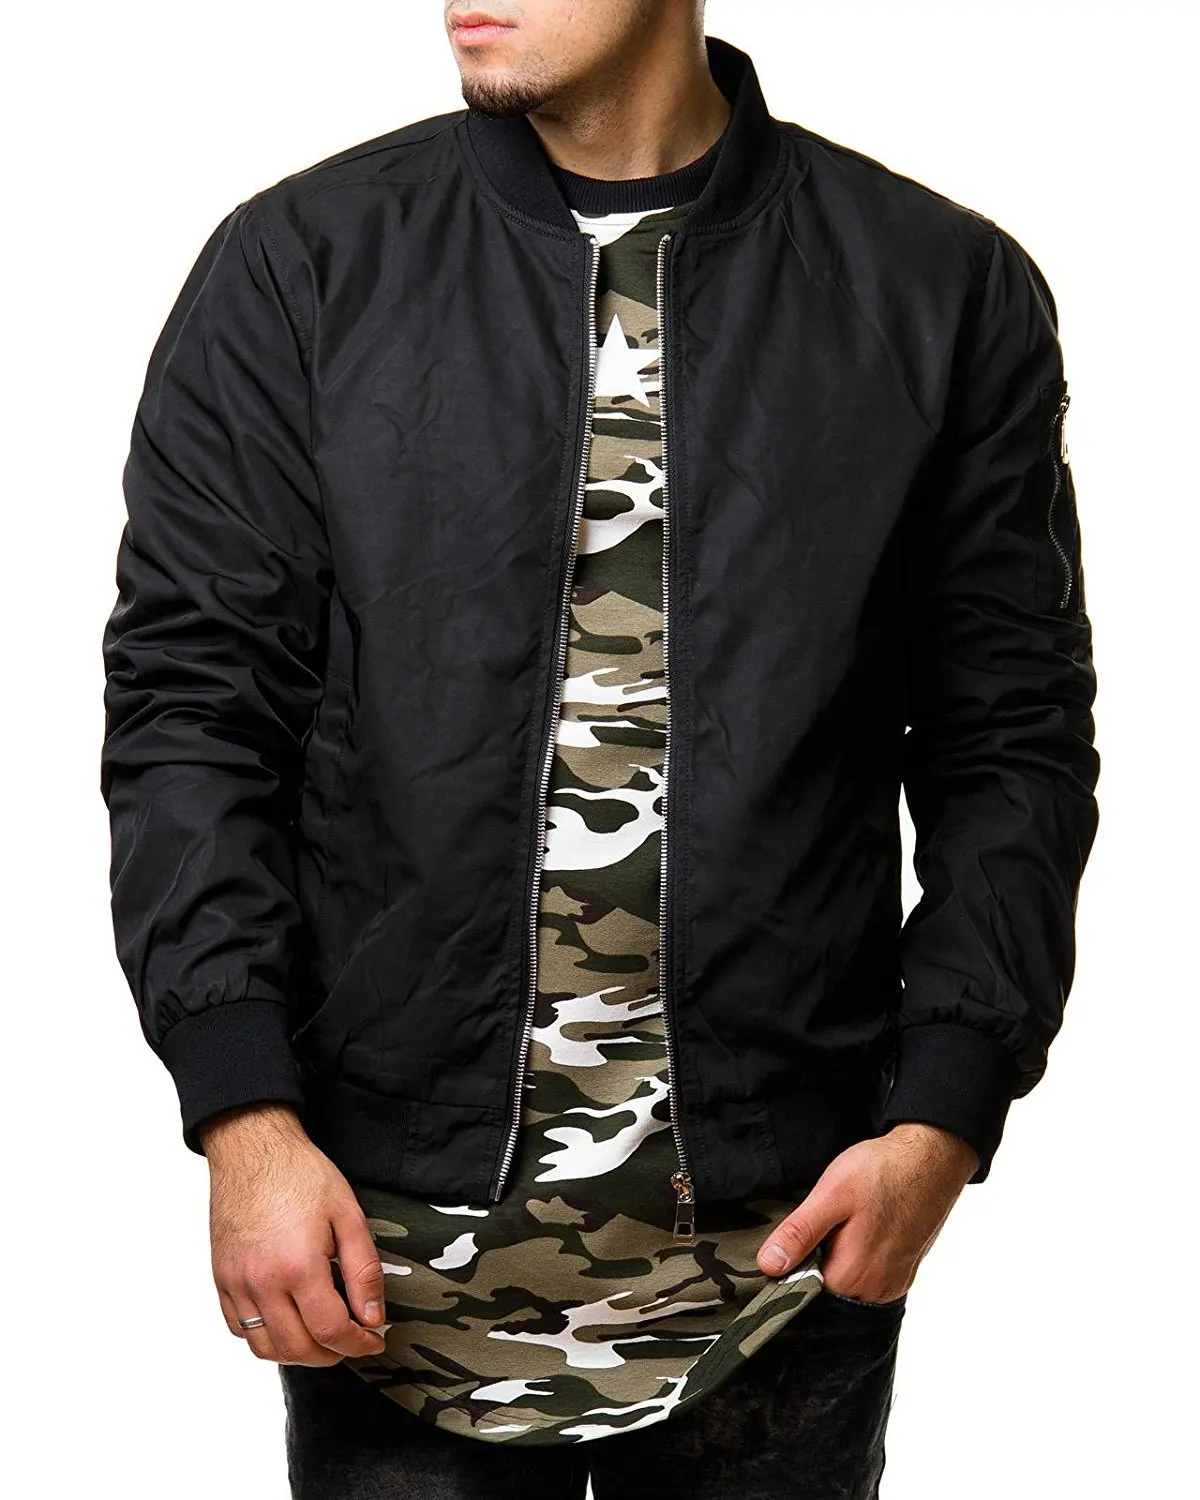 New Casual Bomber Jackets Men's Thin Coats Spring Autumn Chaqueta de hombre Male Short Jackets Army Military Men Outerwear